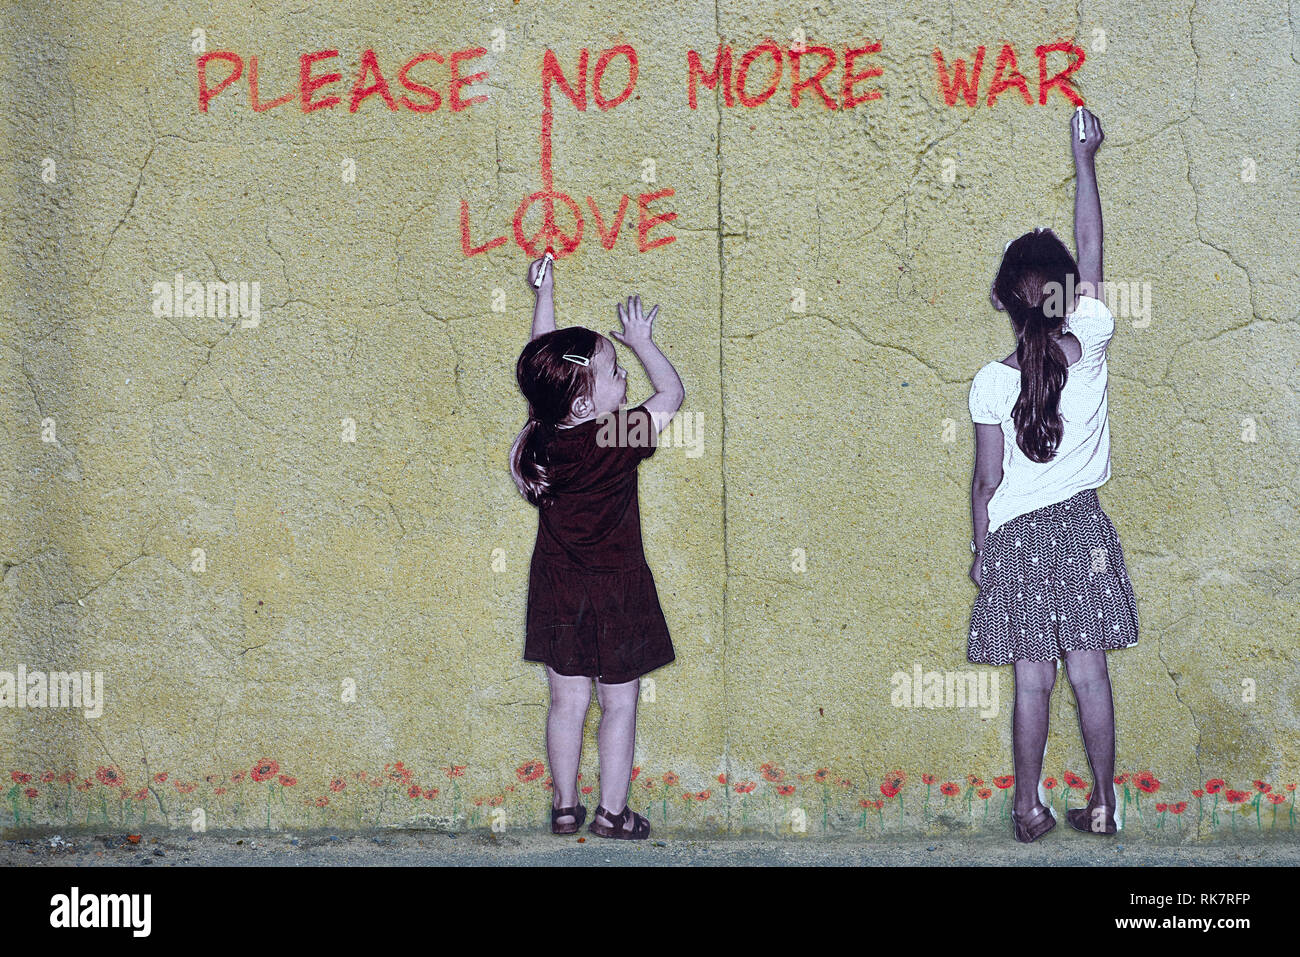 Anti War graffiti in Stock Photo